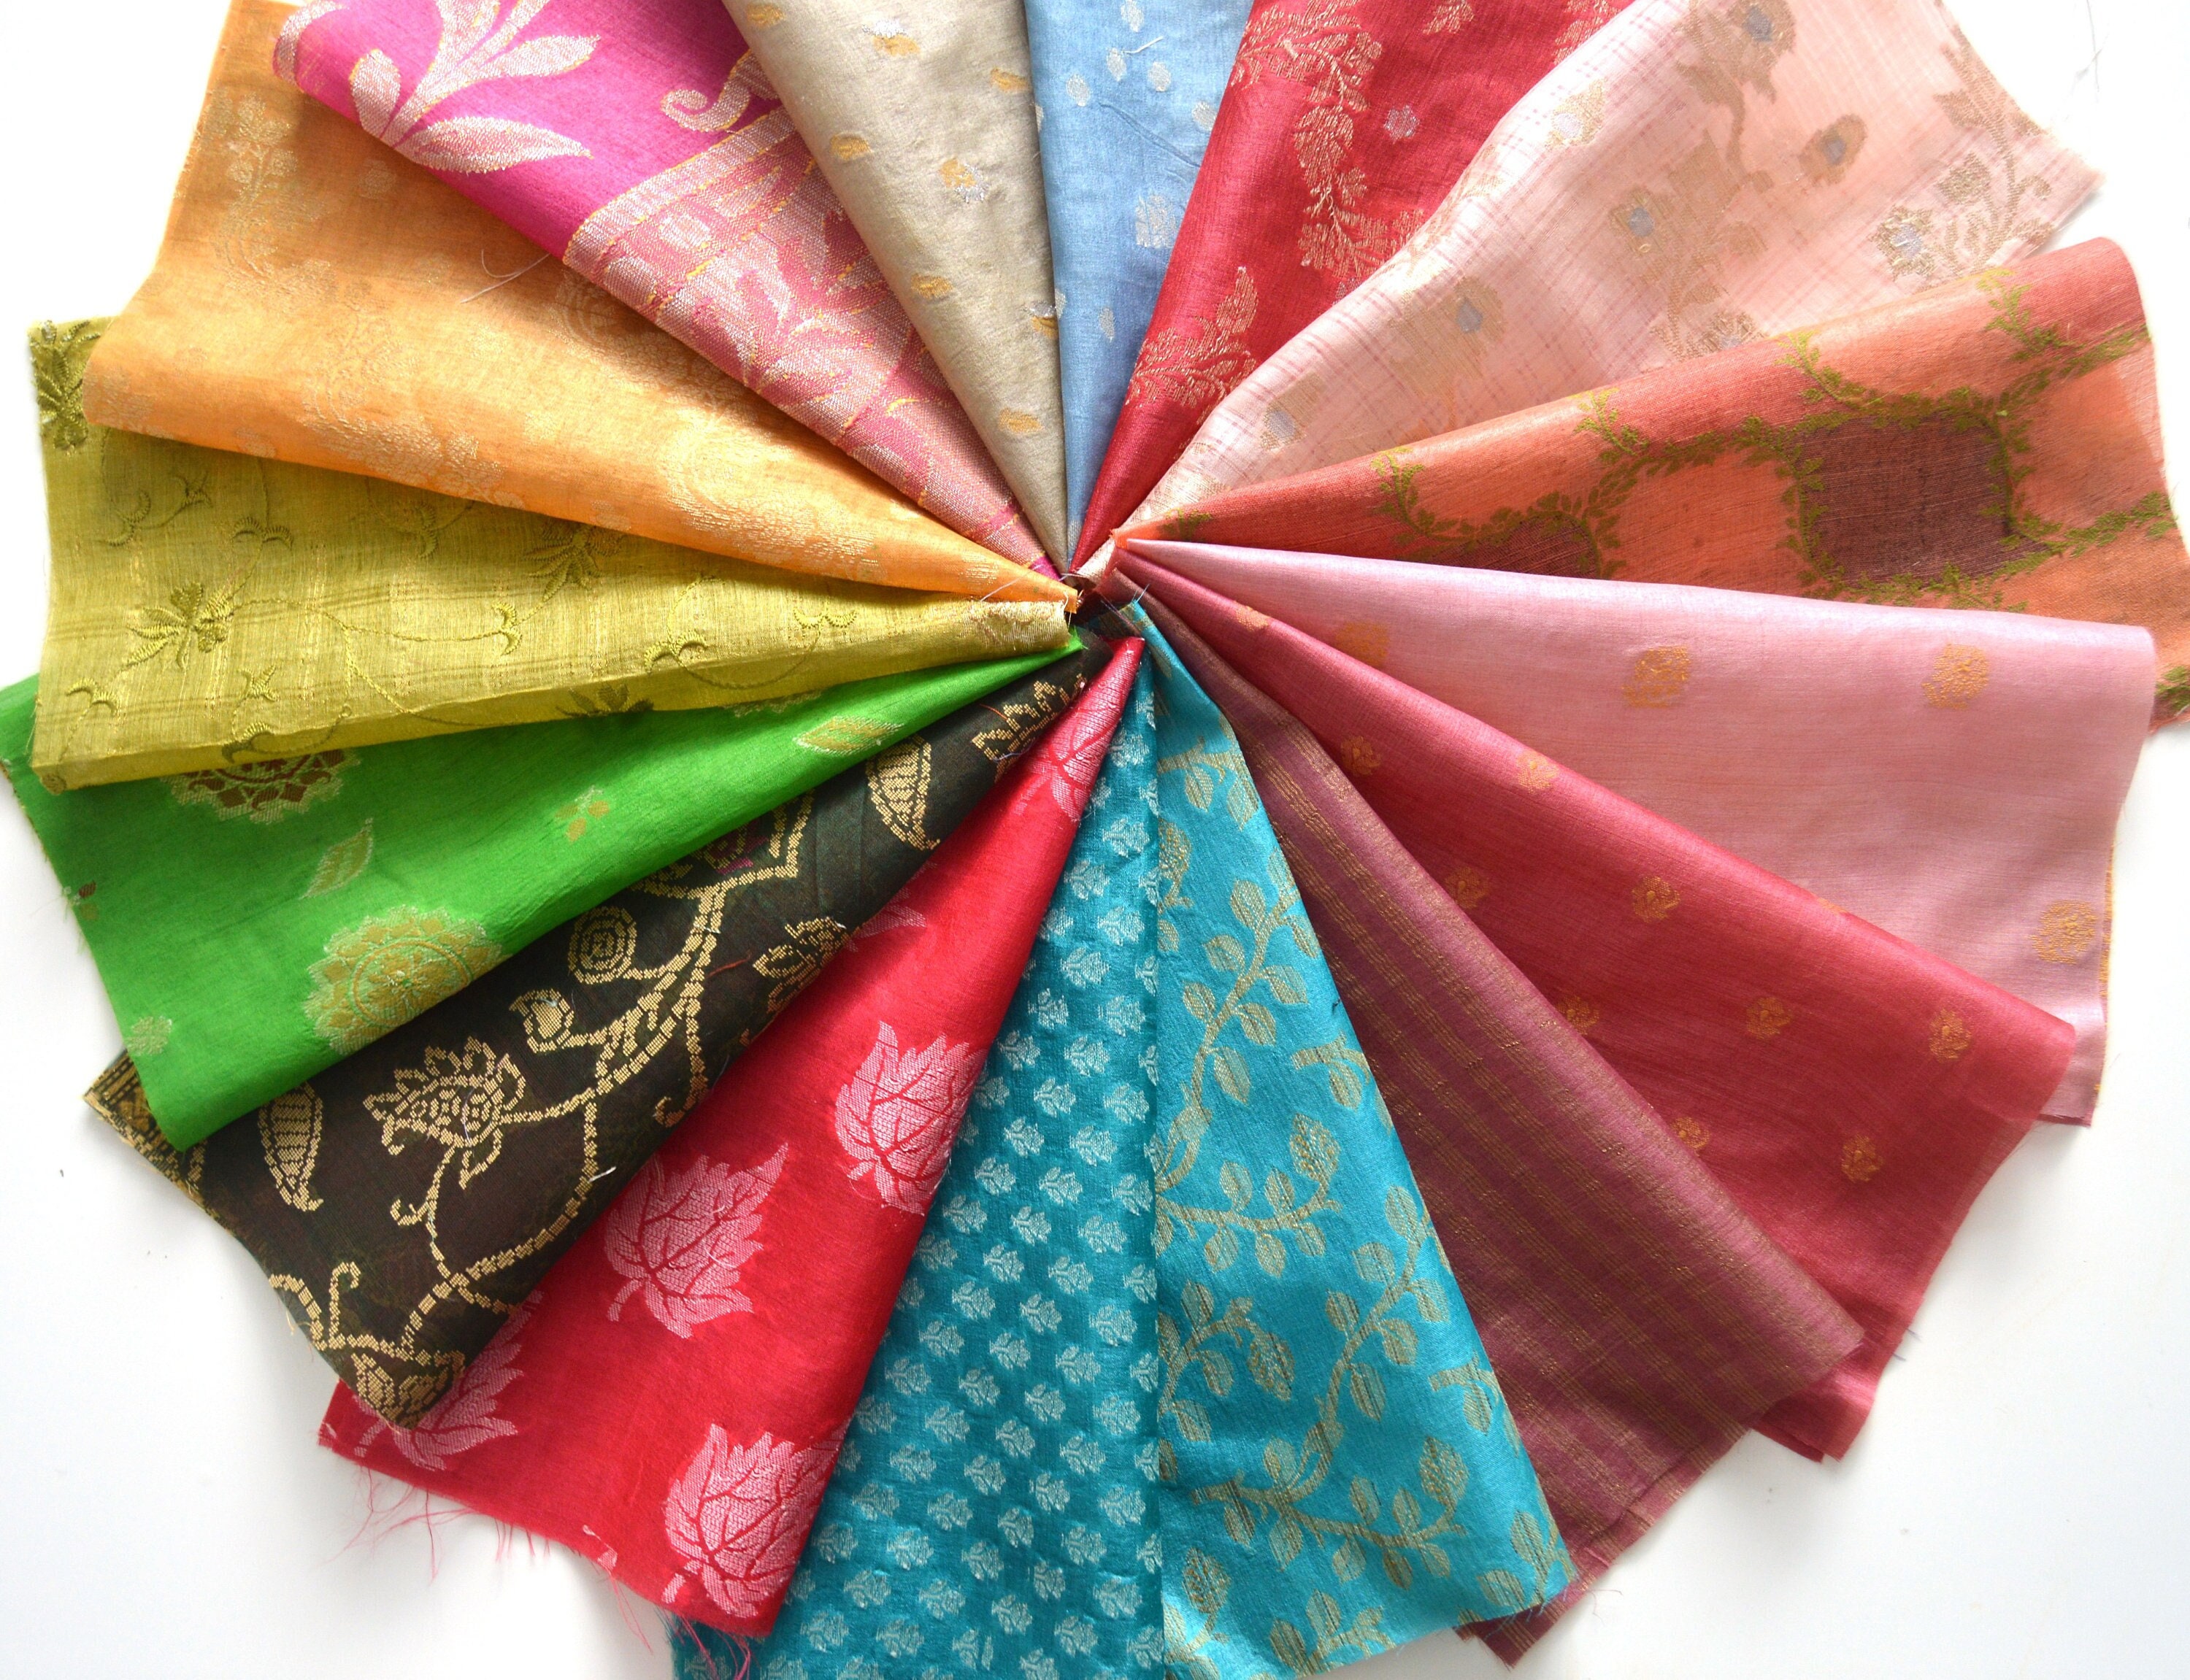 Mixed Assorted Embellished Sari Fabric Remnants Scraps 10 Pieces 